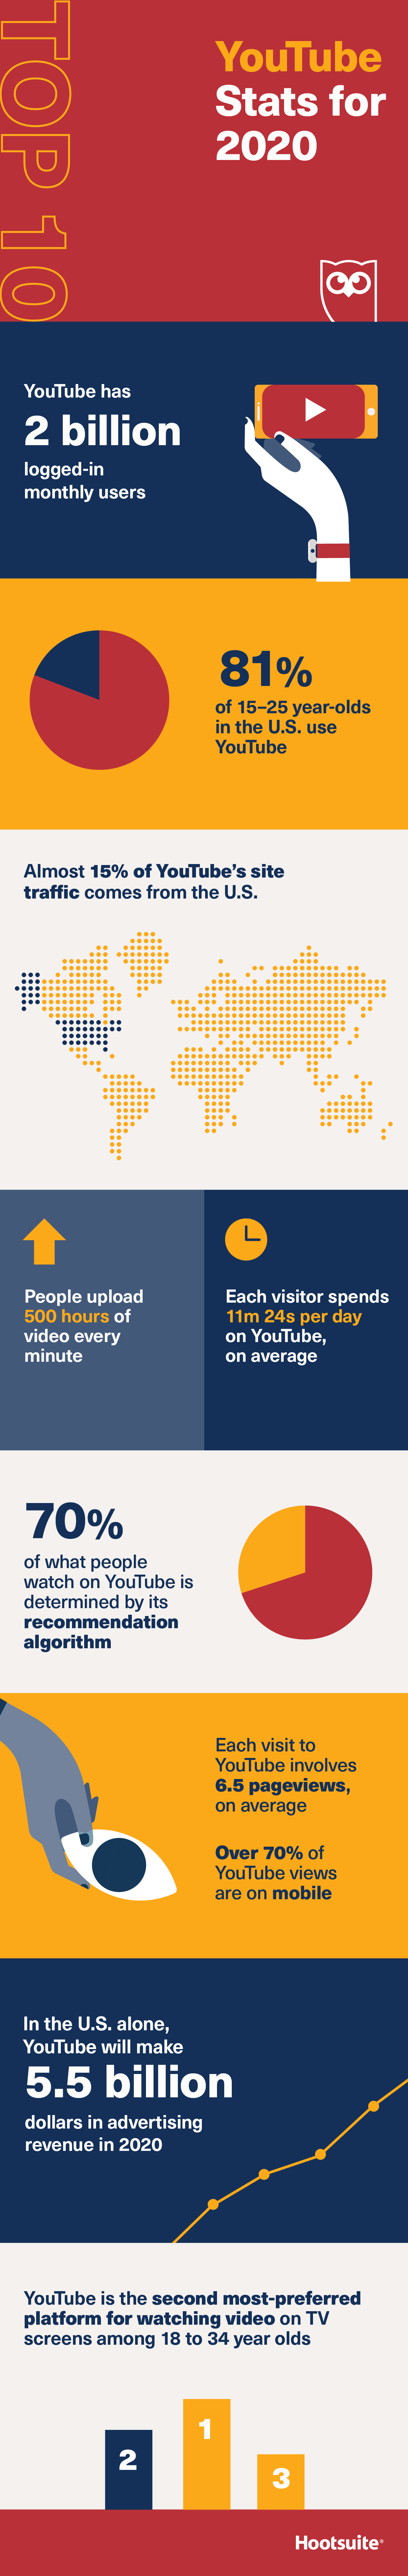  youtube-statistics-infographic